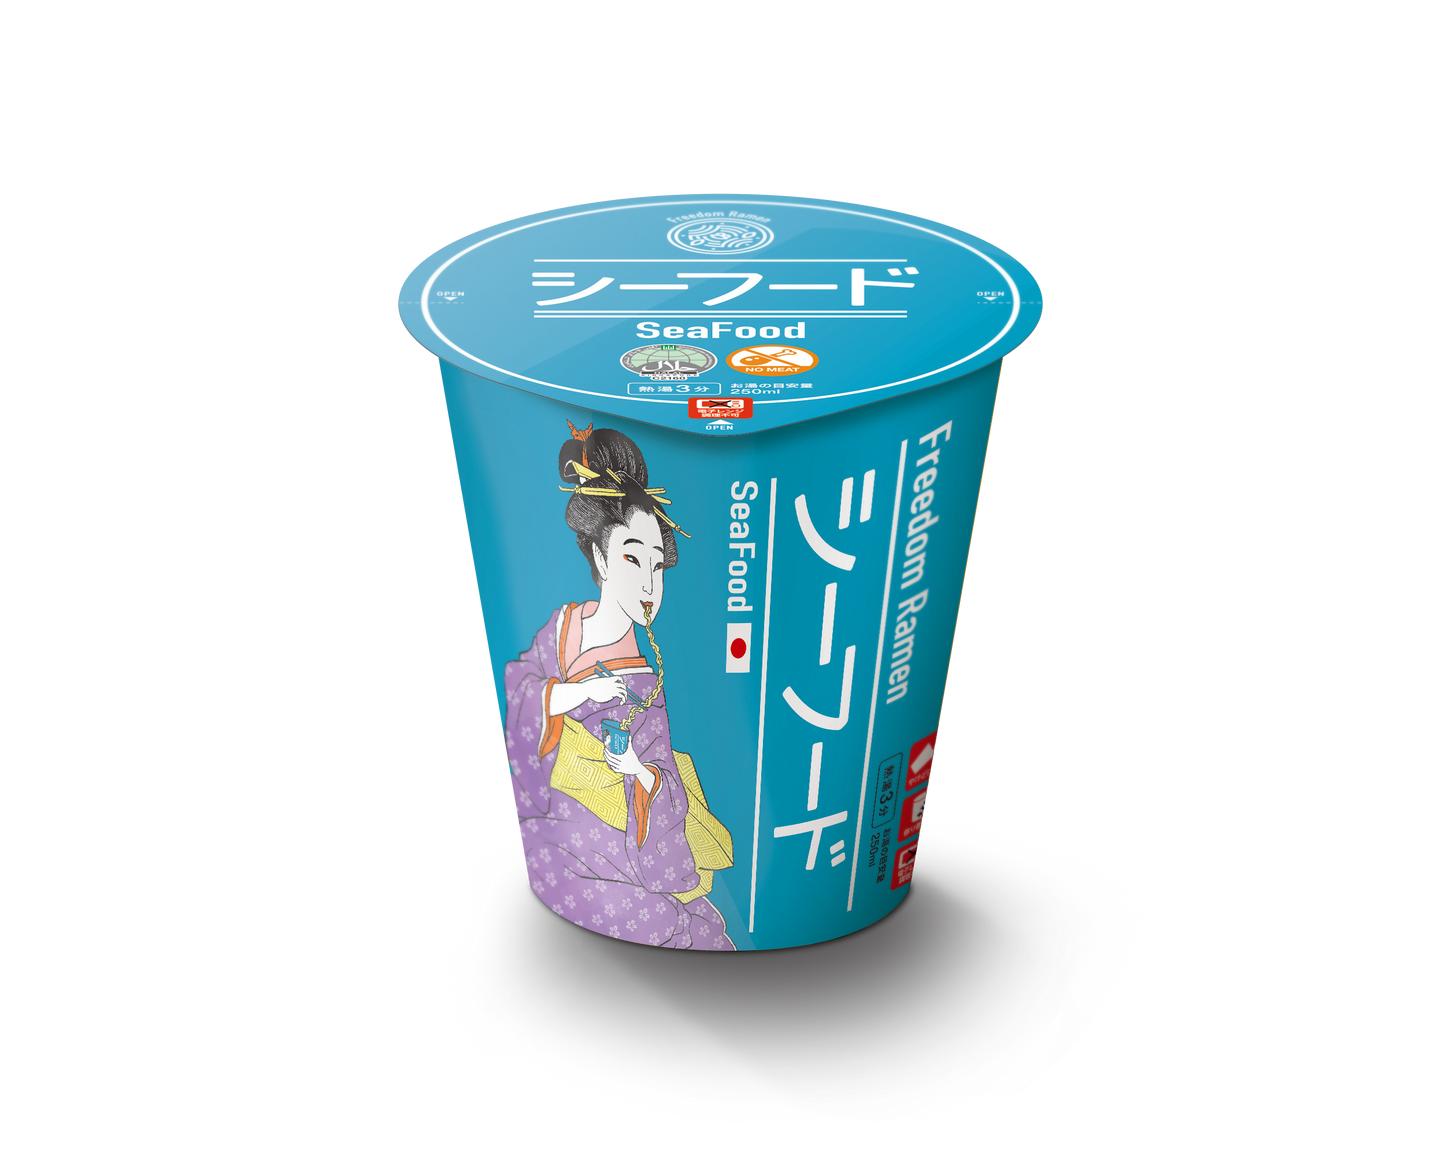 Halal cup noodles [seafood flavor] No animal ingredients used